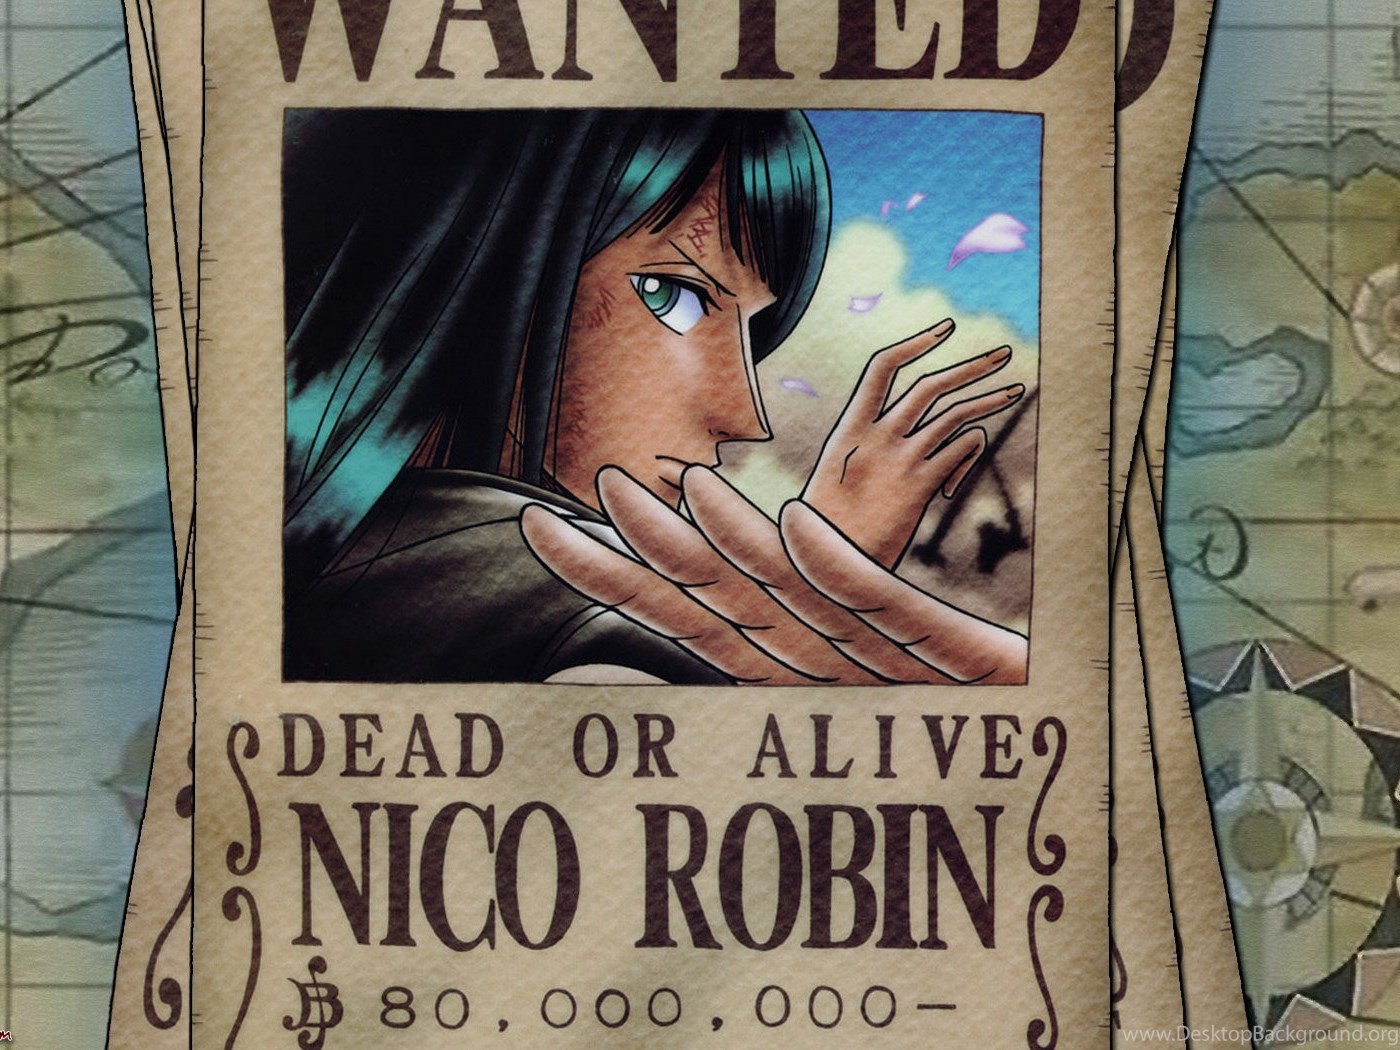 Download Nico Robin Wanted Poster HD Wallpapers Fullscreen Standart 4:3 140...